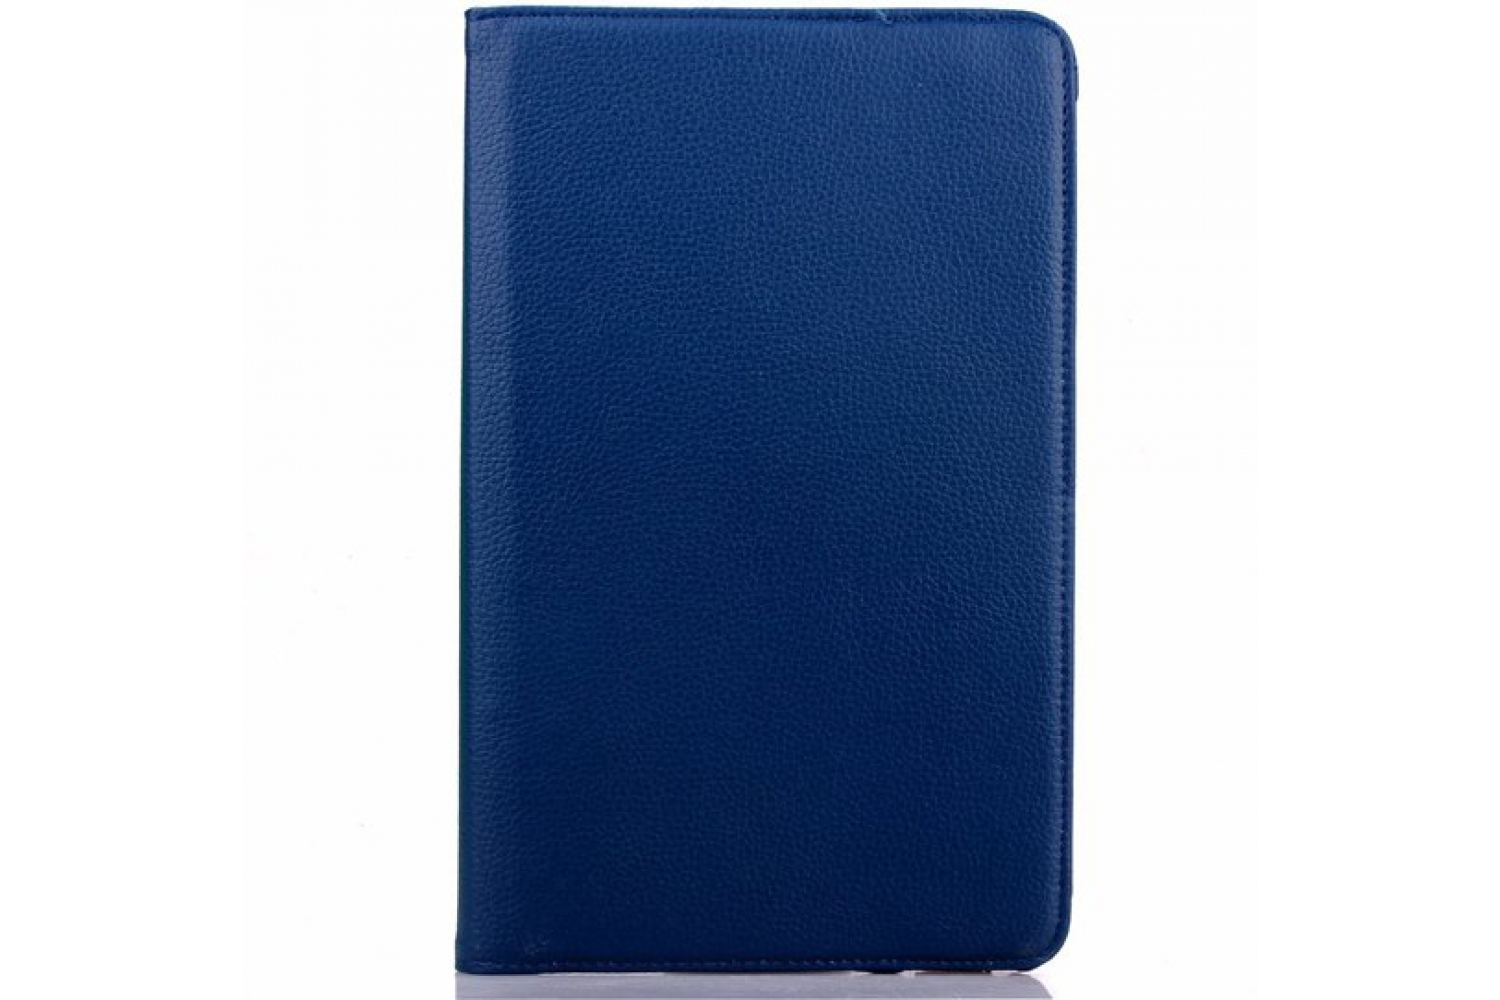 Samsung Galaxy Tab E 9.6 inch Draaibare Hoes Blauw